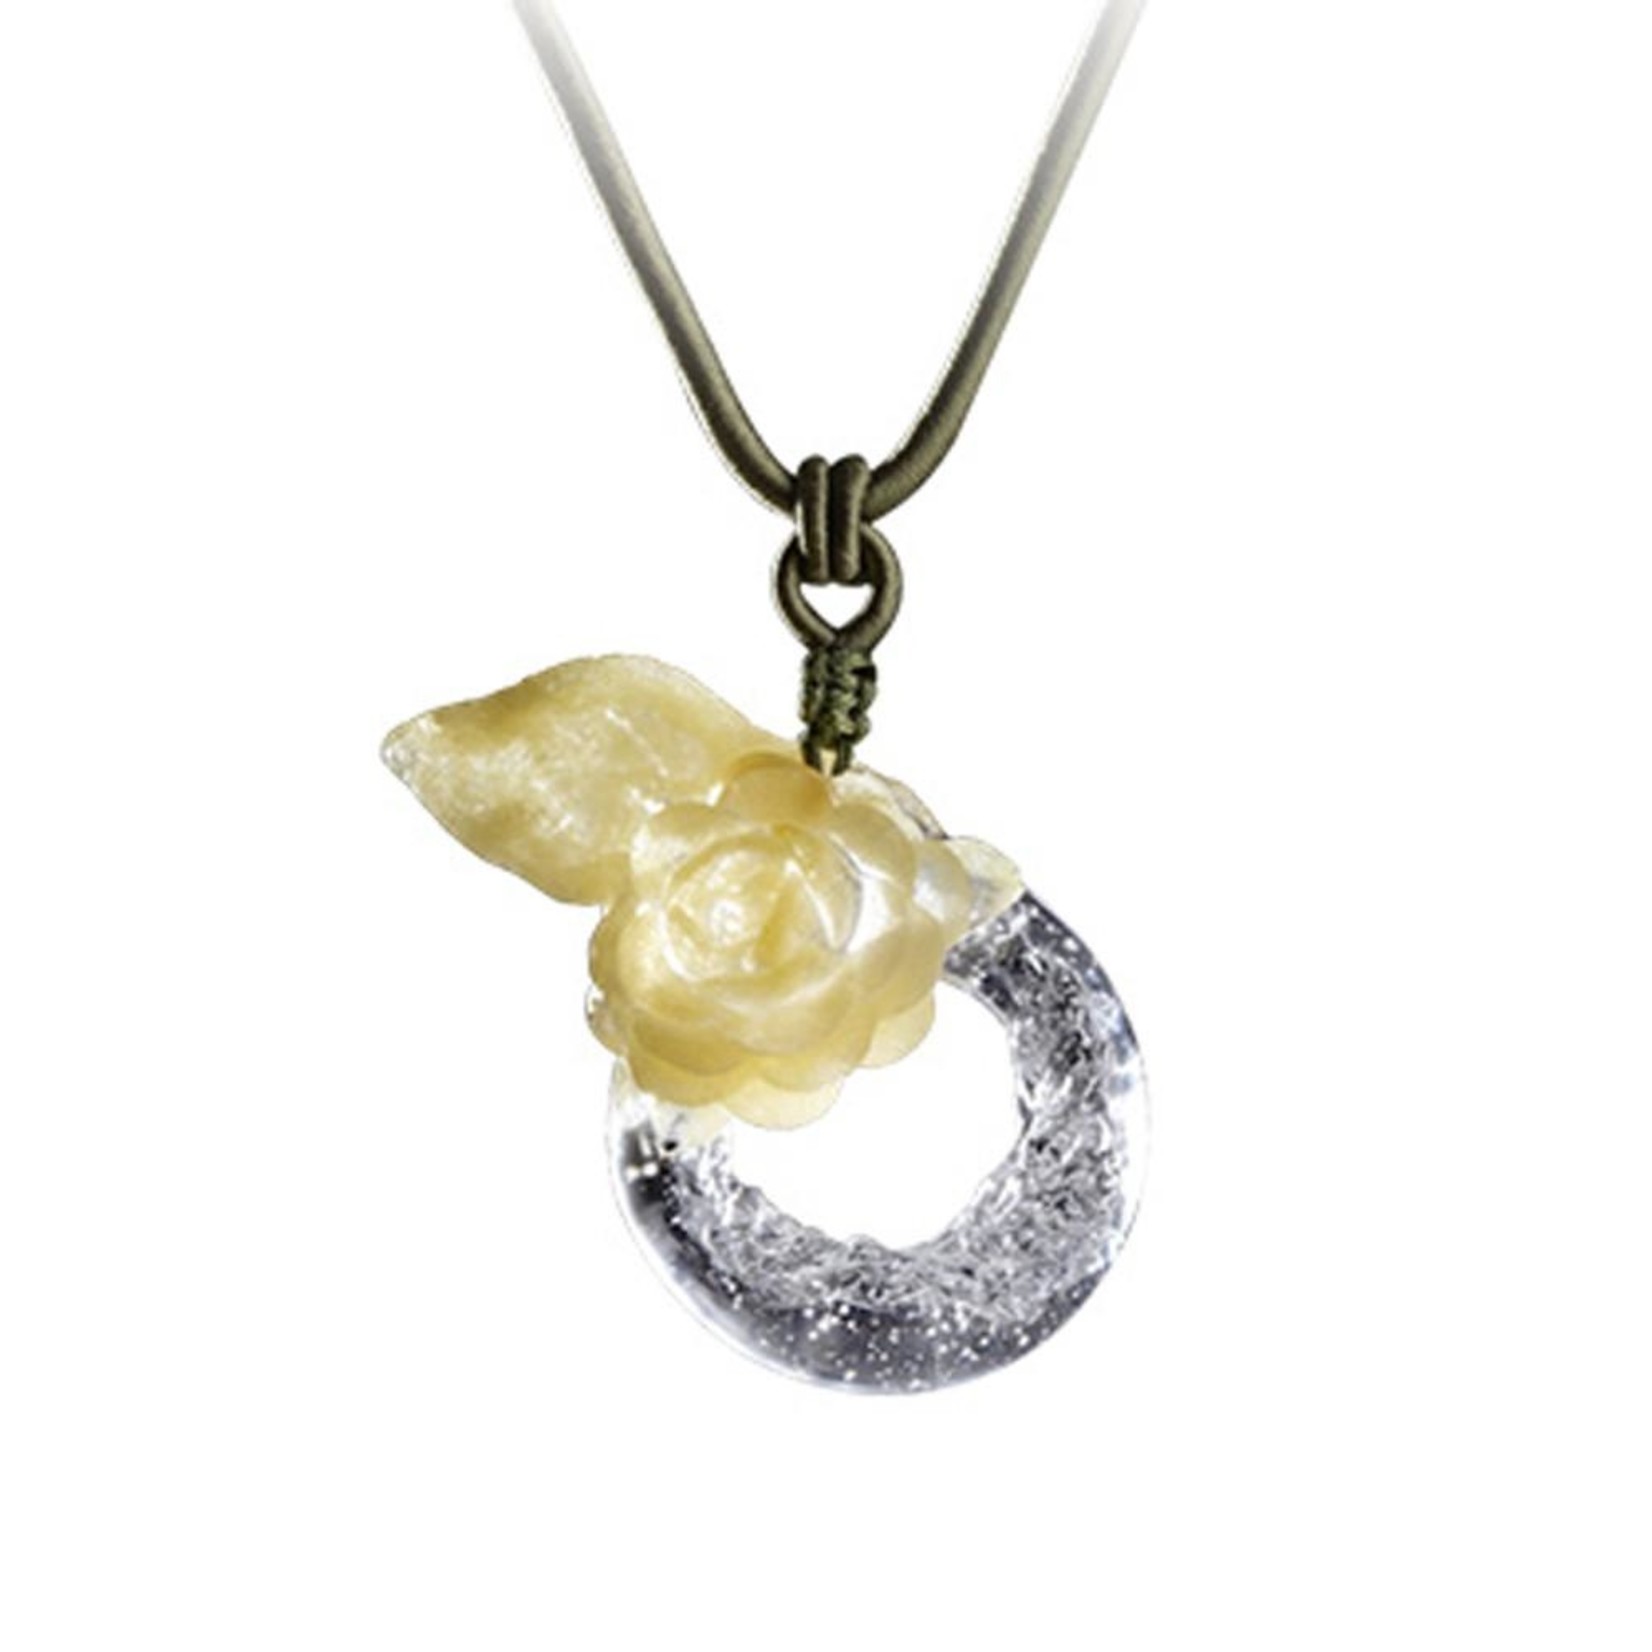 LIULI Crystal Art Crystal "Singular Elegance" Camellia Flower Pendant Necklace in Amber Powder (Limited Edition)